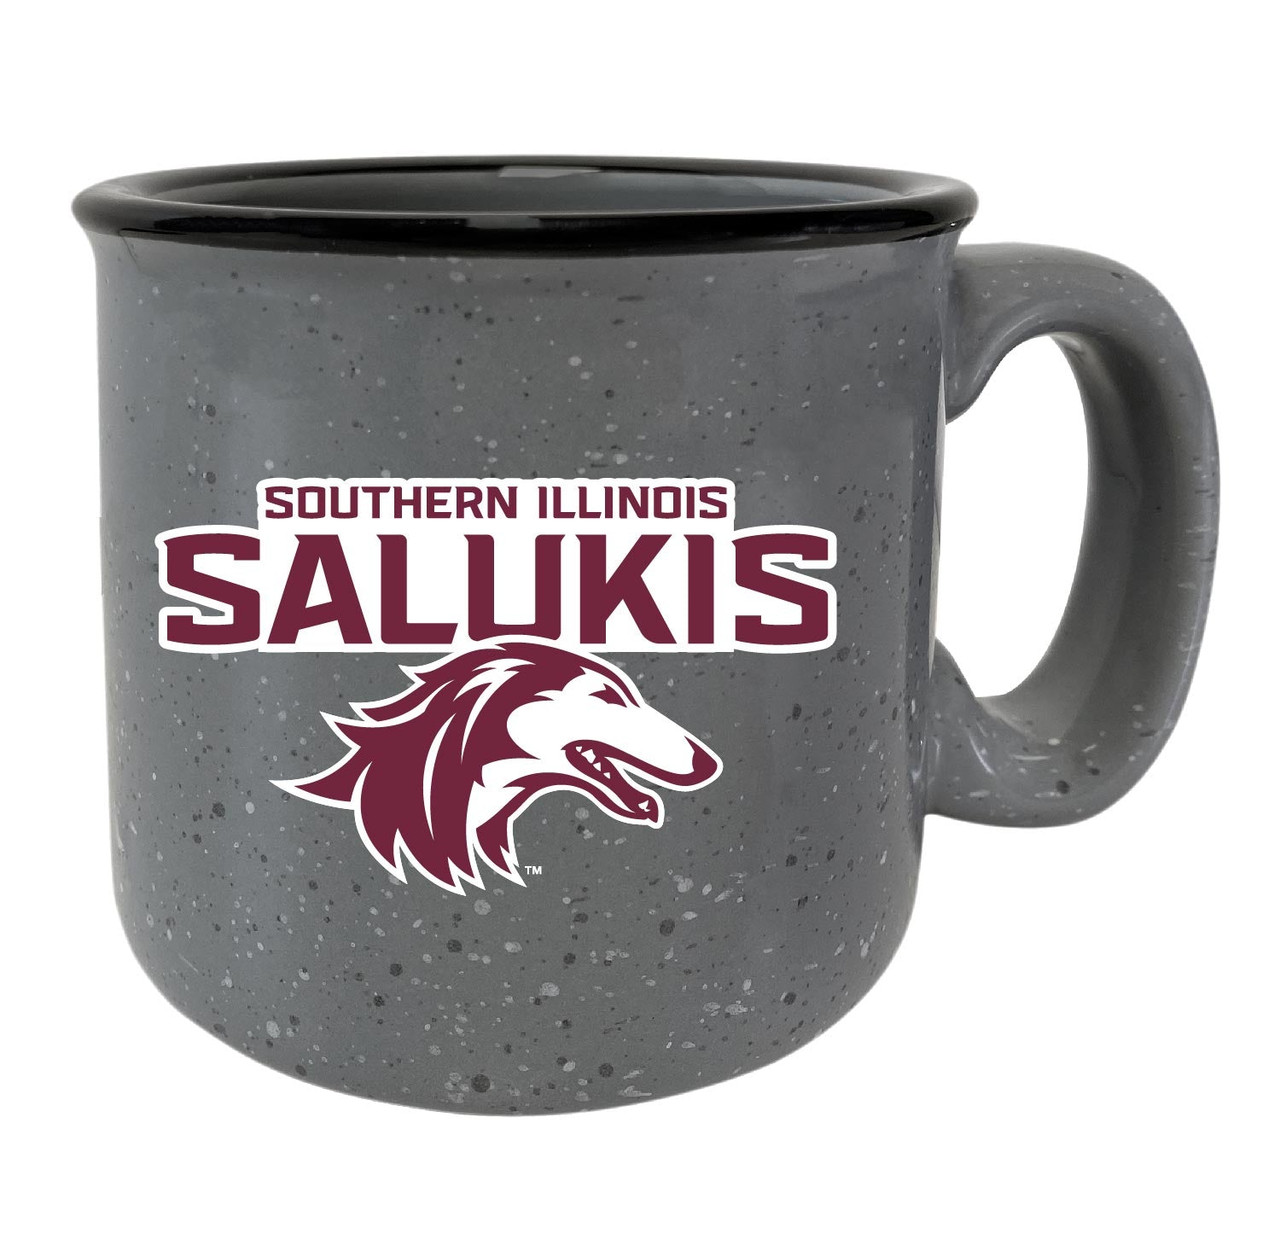 Southern Illinois Salukis 8 oz Speckled Ceramic Camper Coffee Mug (Gray).